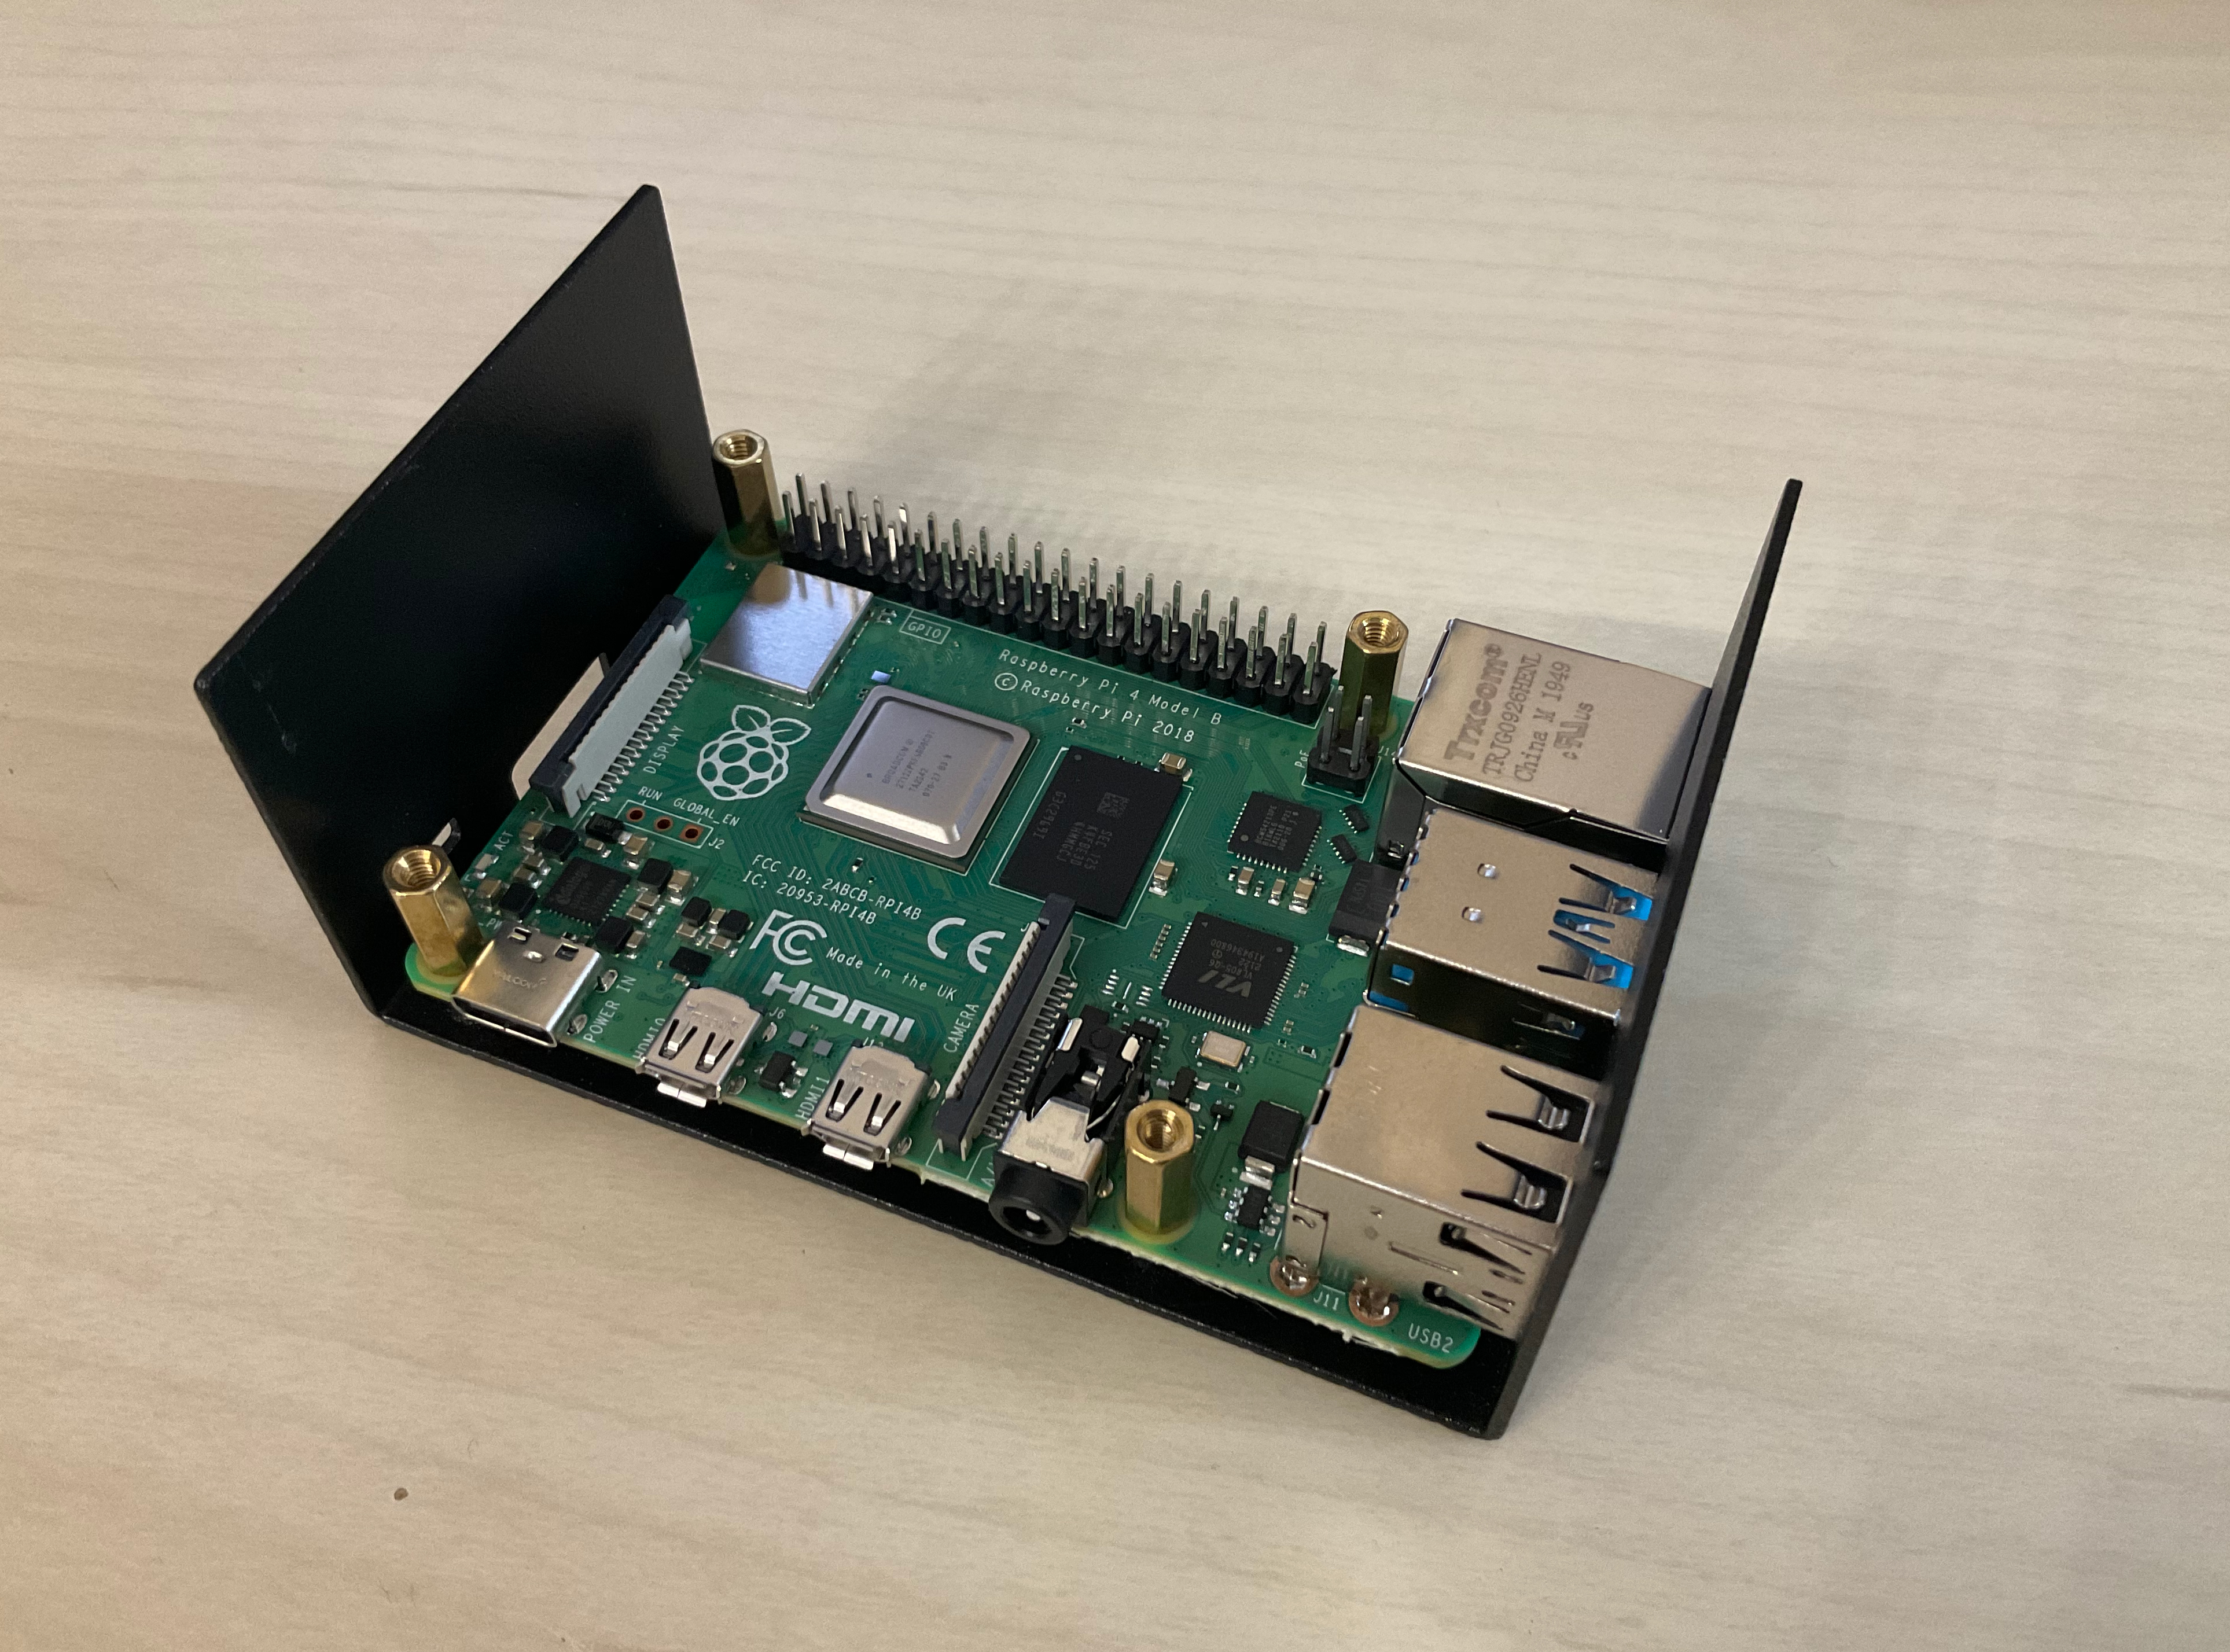 Raspberry Pi board mounted to base